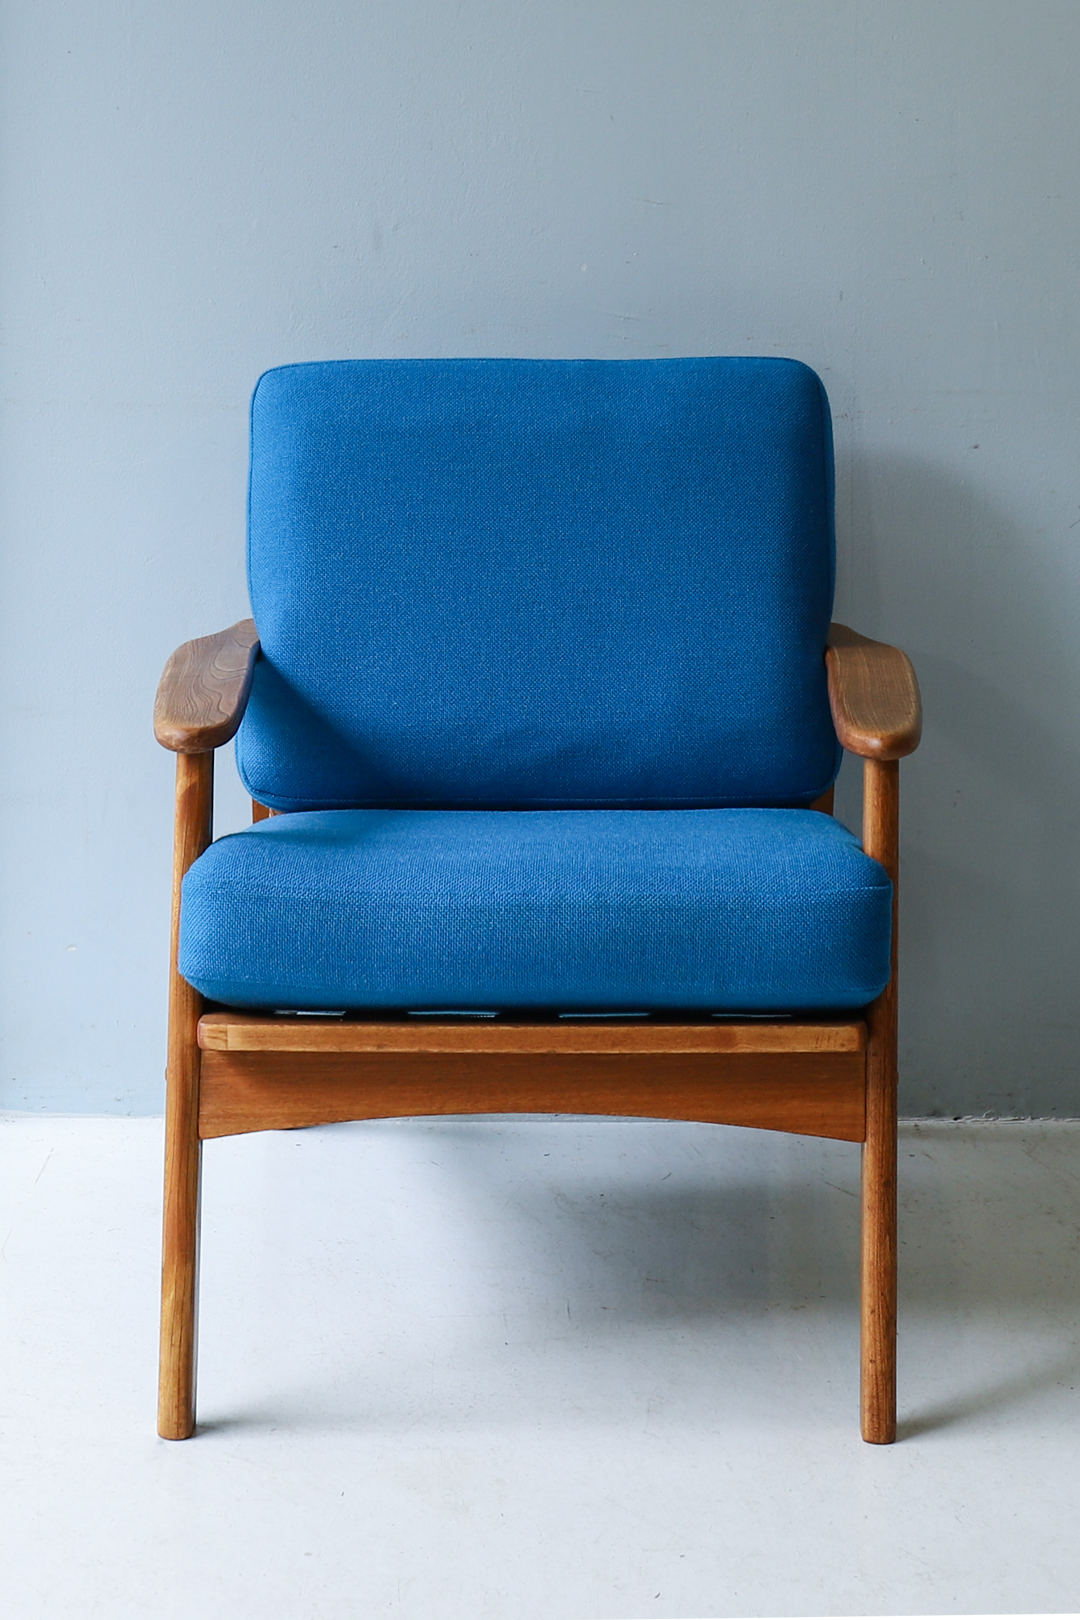 Vintage Easy Chair 1P Sofa Beech Wood/ヴィンテージ イージーチェア ソファ ビーチ材 椅子 ミッドセンチュリーモダン